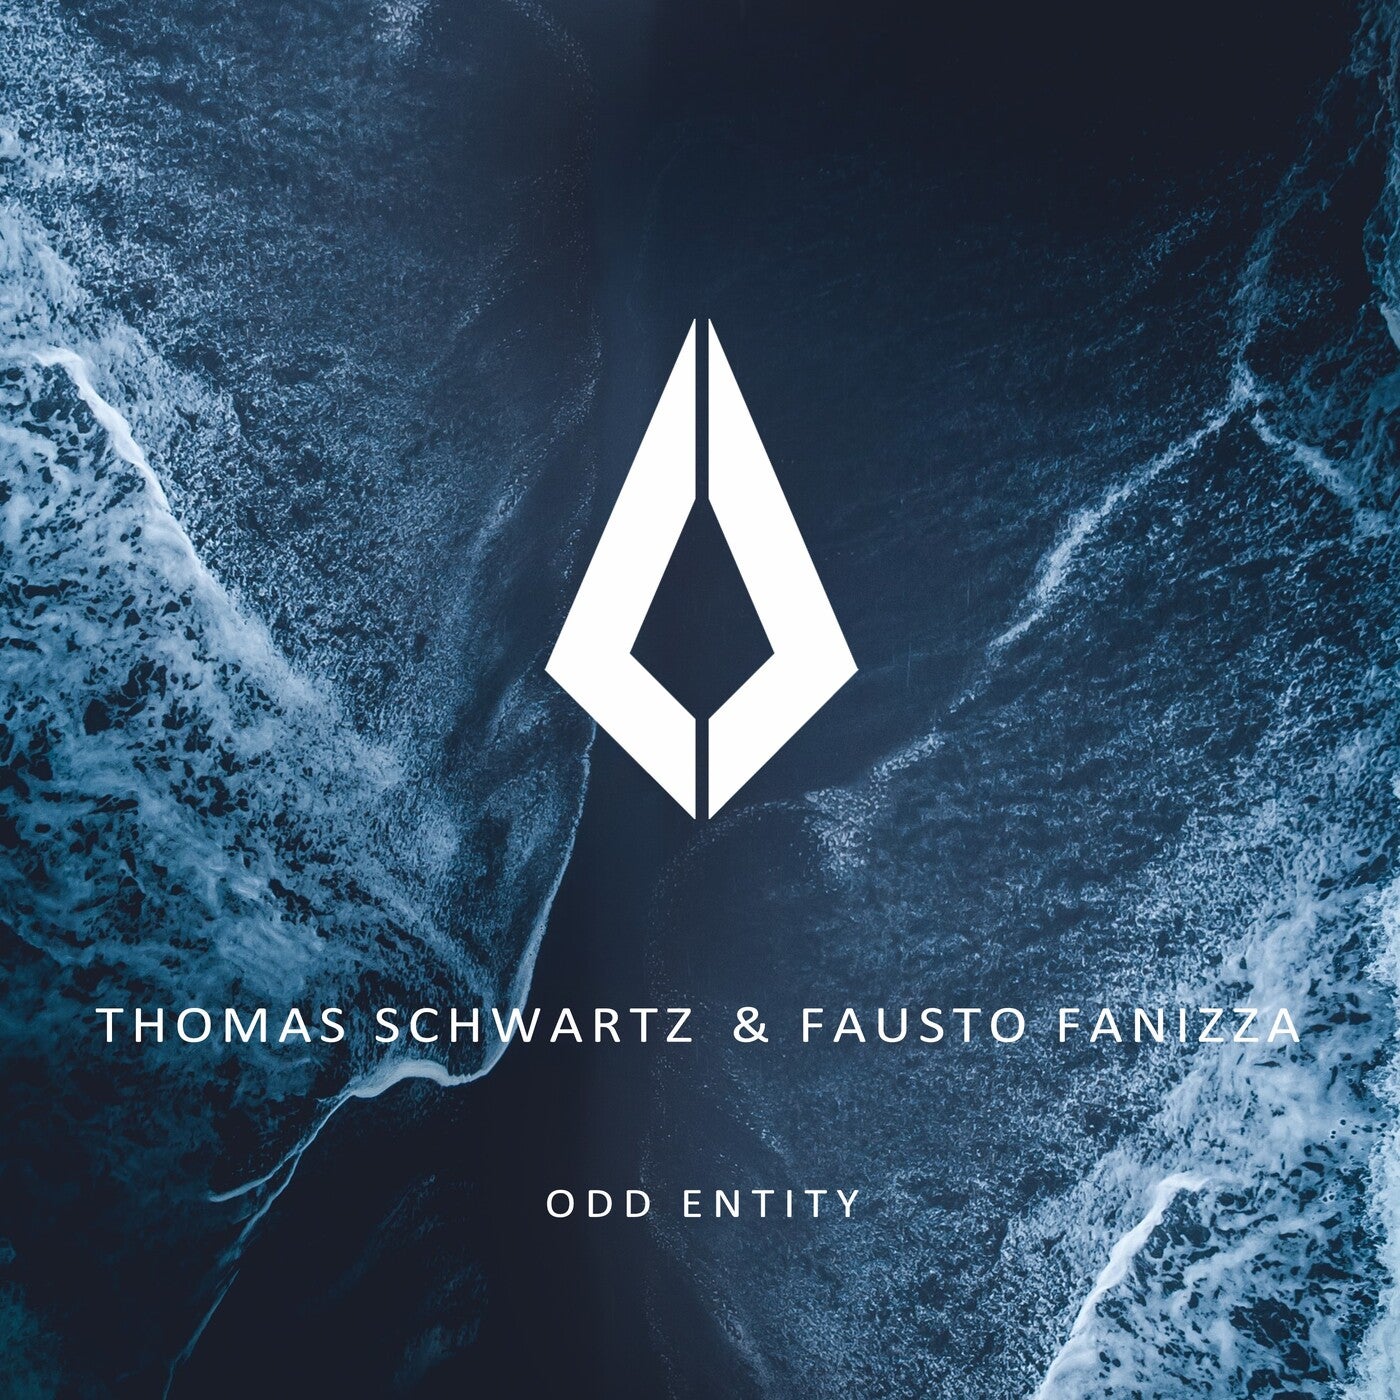 Thomas Schwartz & Fausto Fanizza - Odd Entity (Extended Mix)